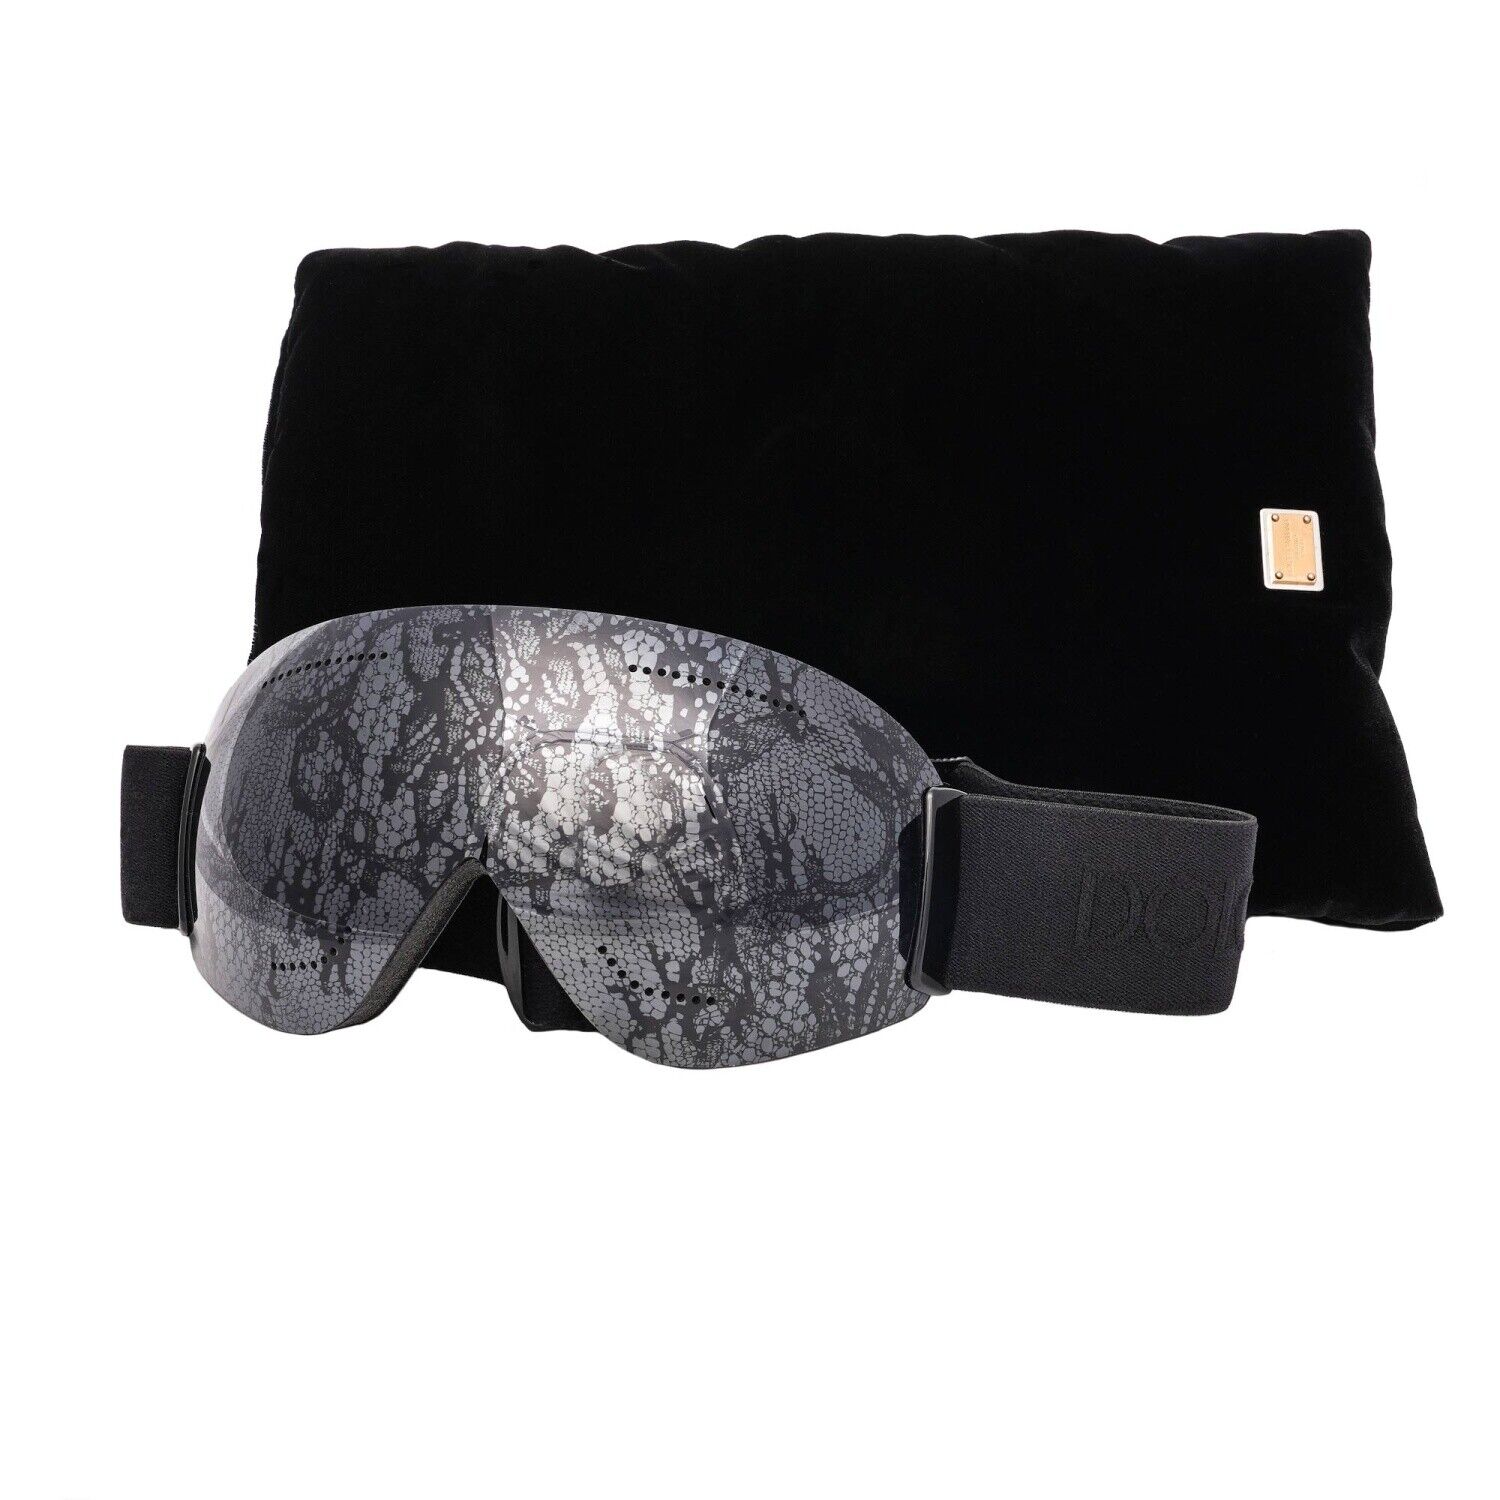 Pre-owned Dolce & Gabbana Bi0759 Ski Lace Goggles Mask Sunglasses Black Gray 12242